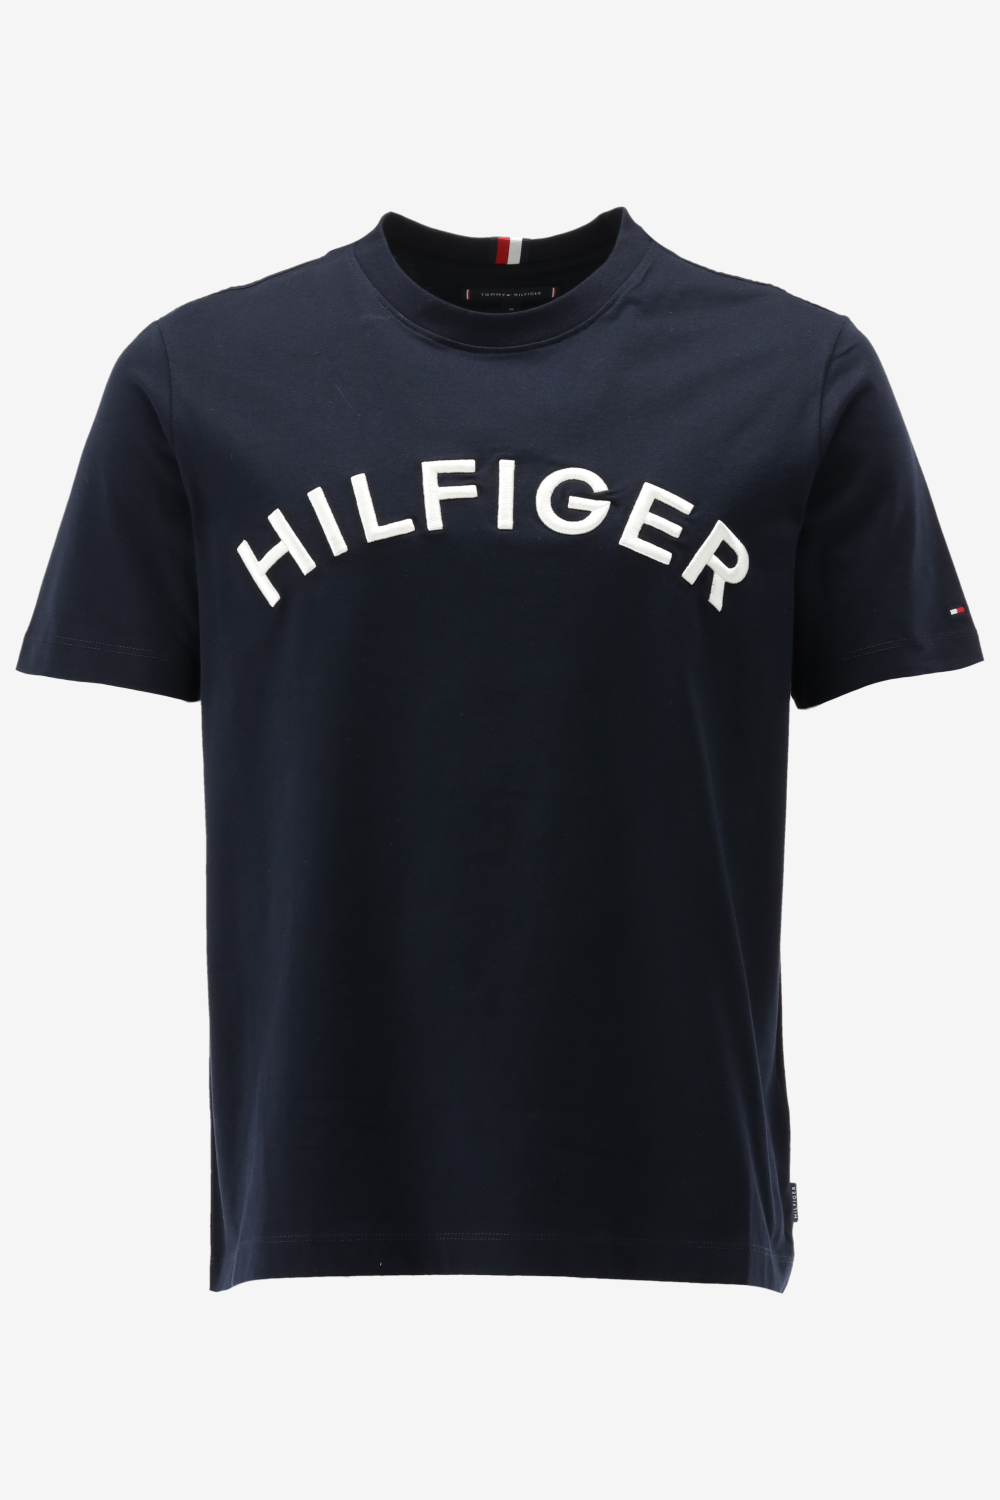 Tommy Hilfiger T-shirt 